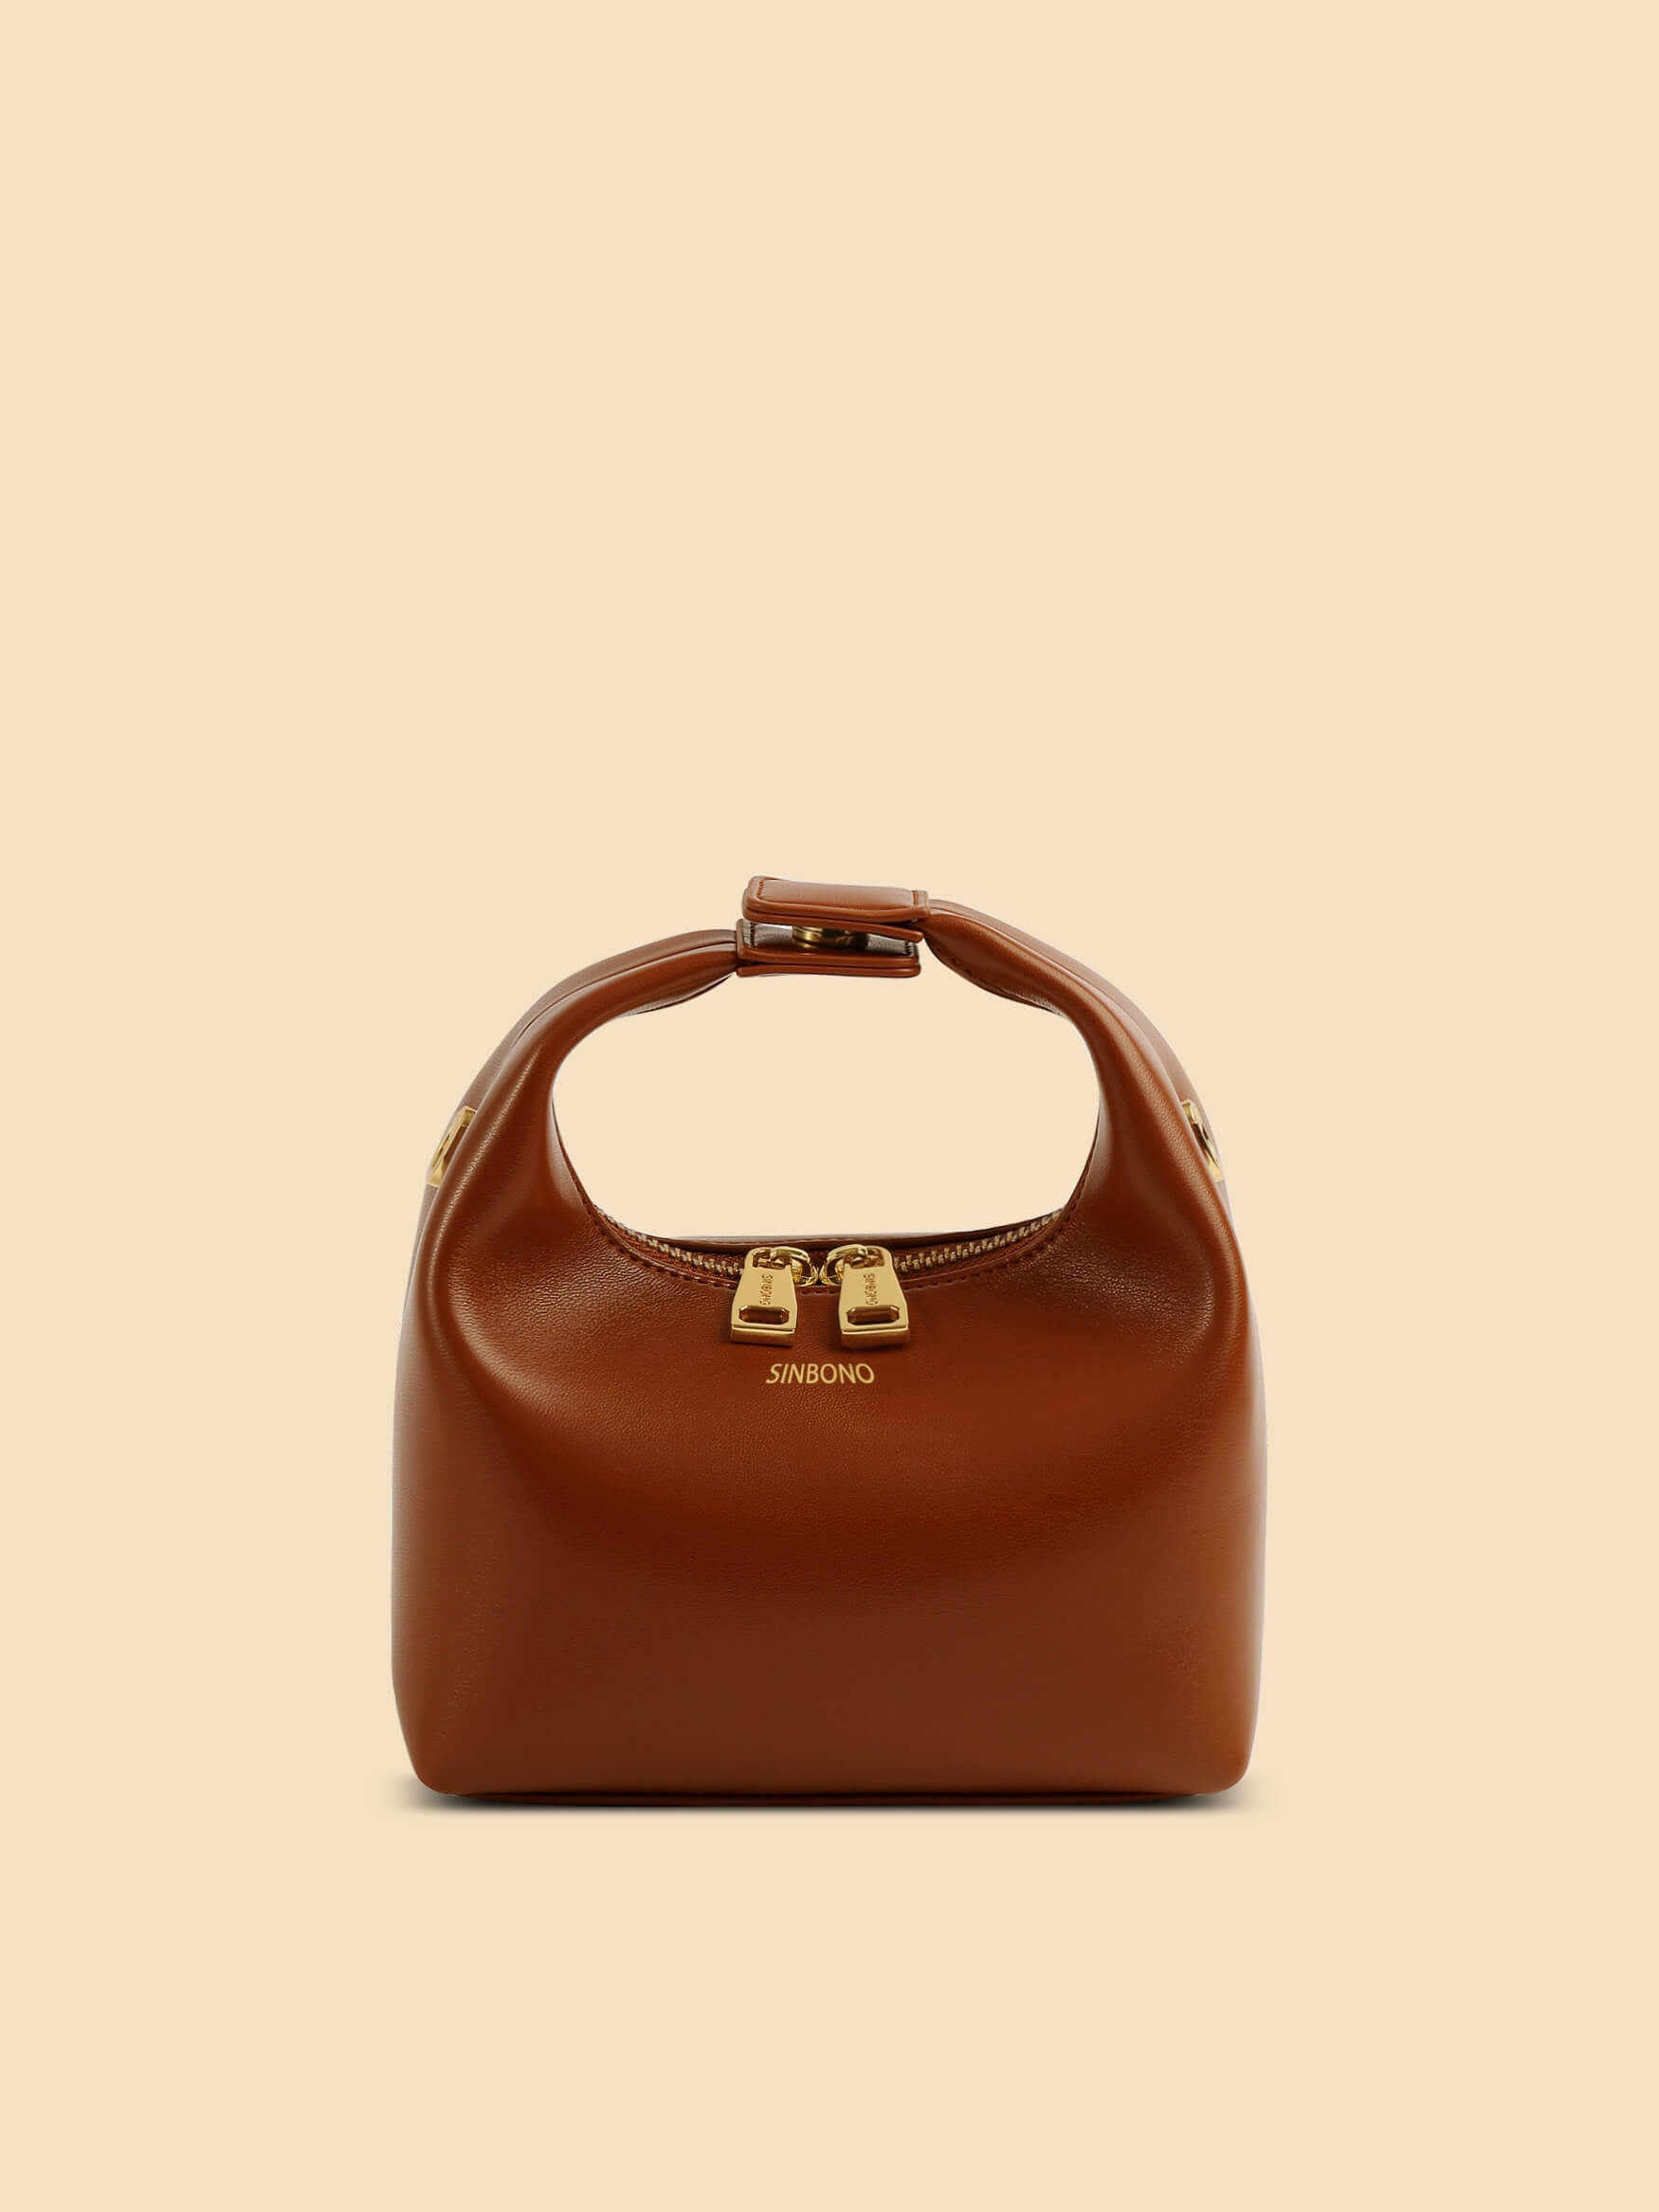 SINBONO Vienna Brown Leather Handbags -Vegan Leather Women Bag